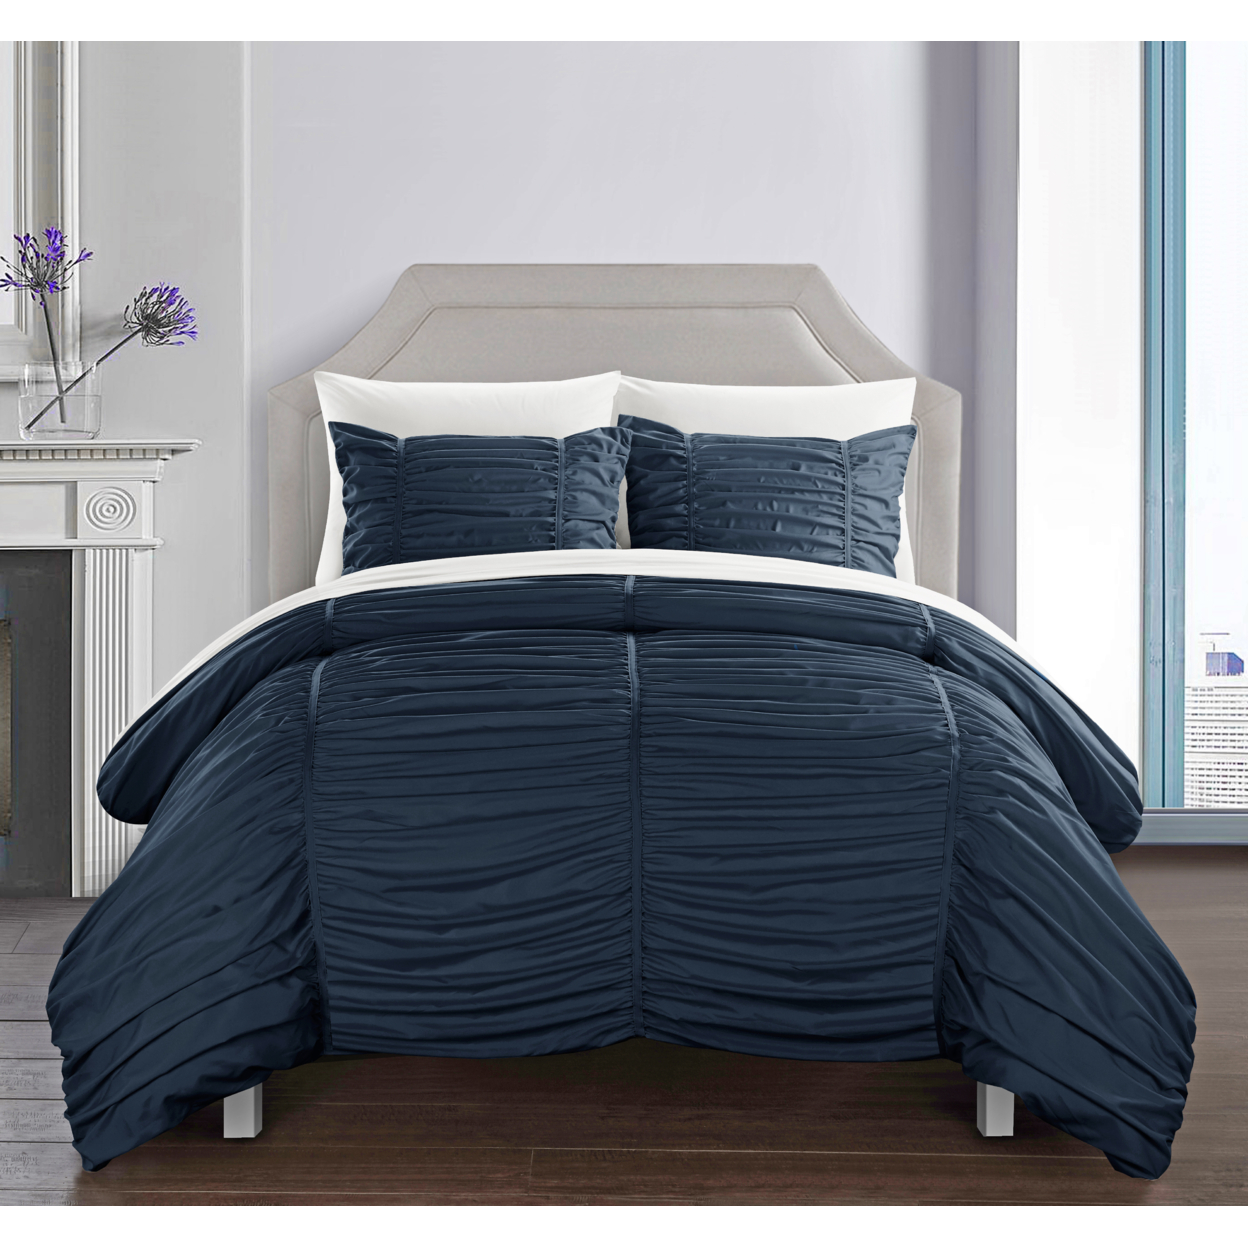 Kiela 2 Pc Or 3 Pc Ruched Comforter Set - Grey, Twin